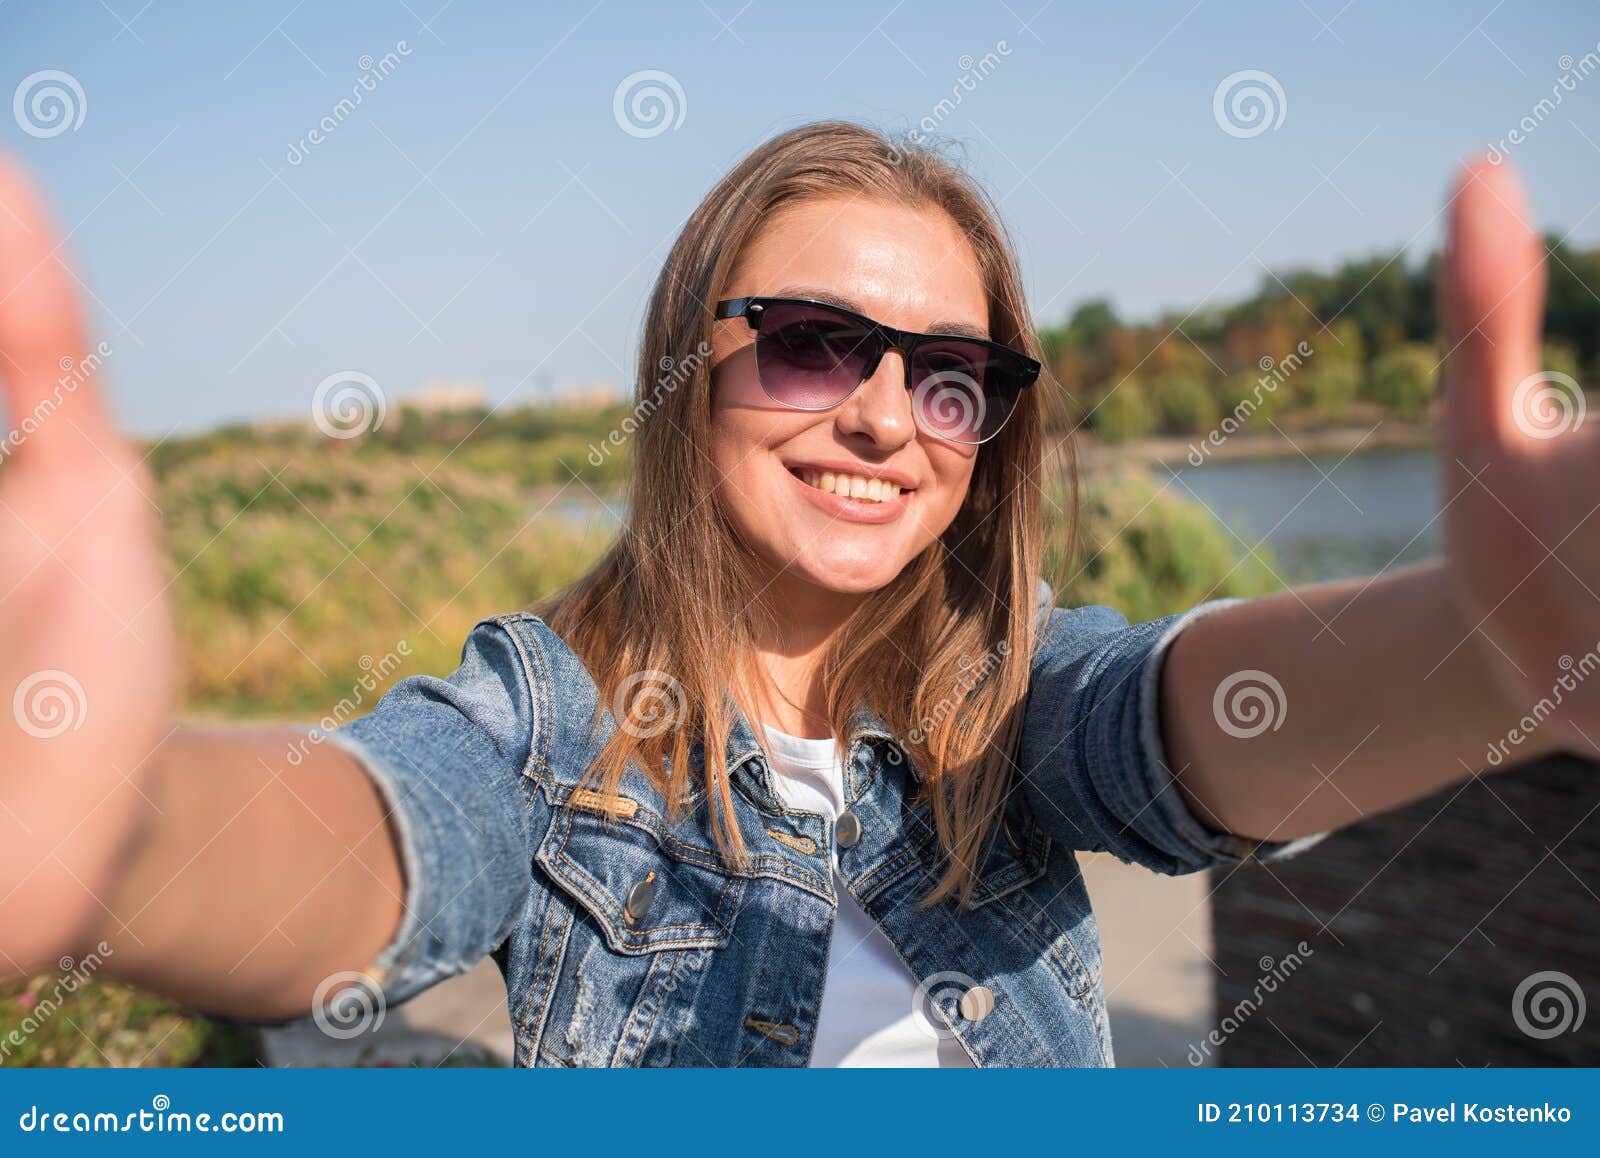 Stunning blonde capturing her cleavage in a selfie - wide 3